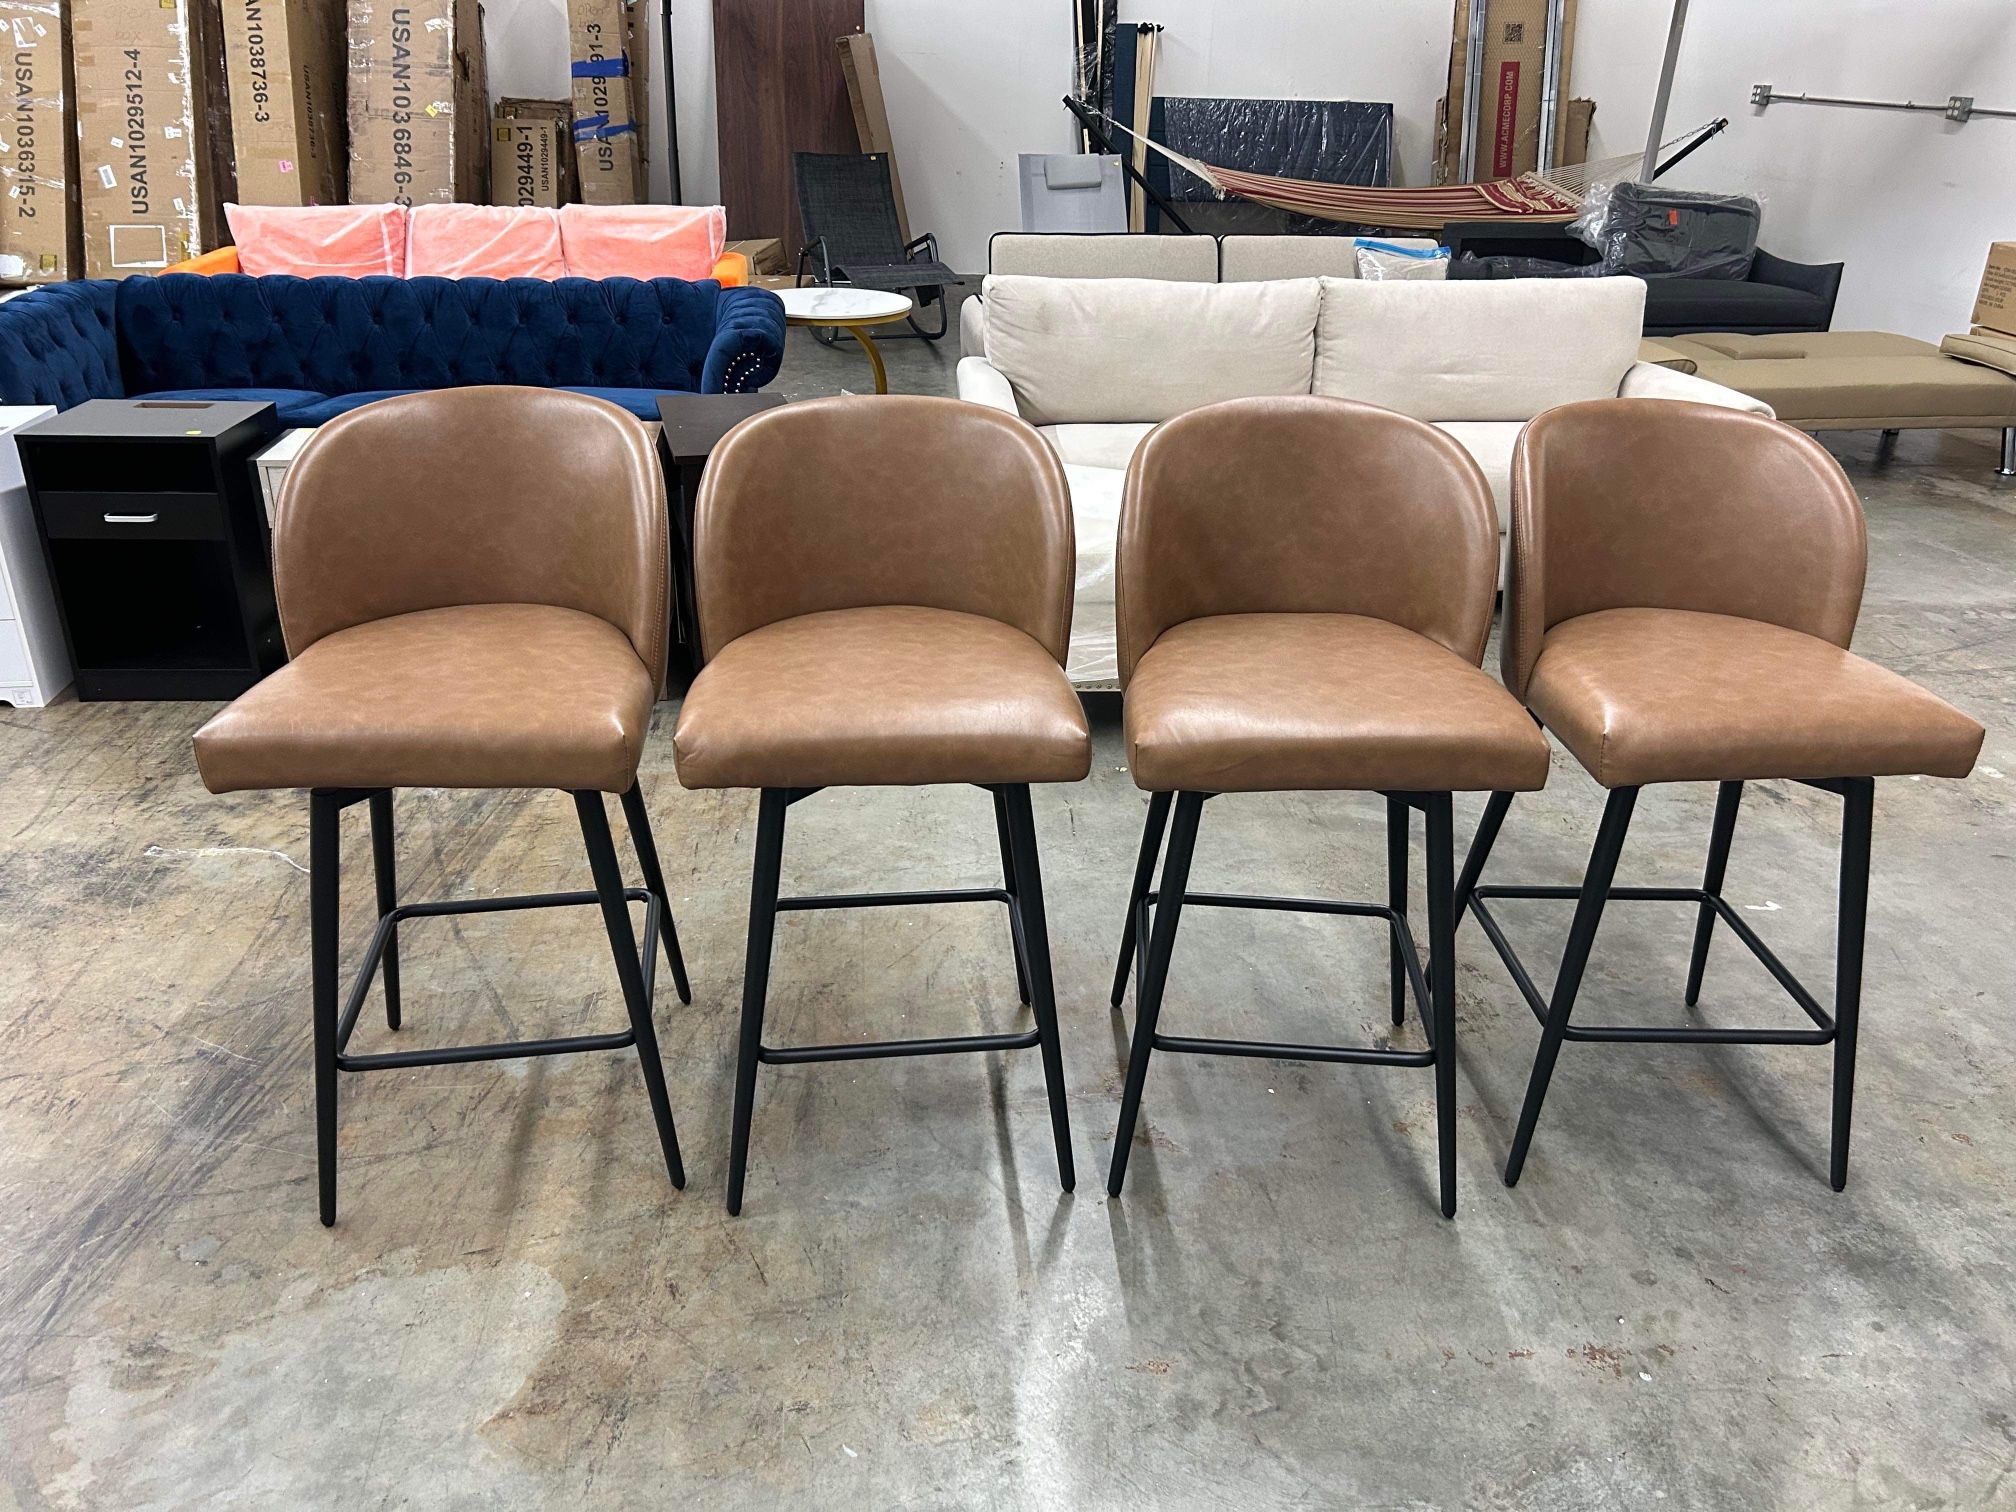 Set of 4 Modern Swivel Bar Stools, Faux Leather Upholstered Bar Stool